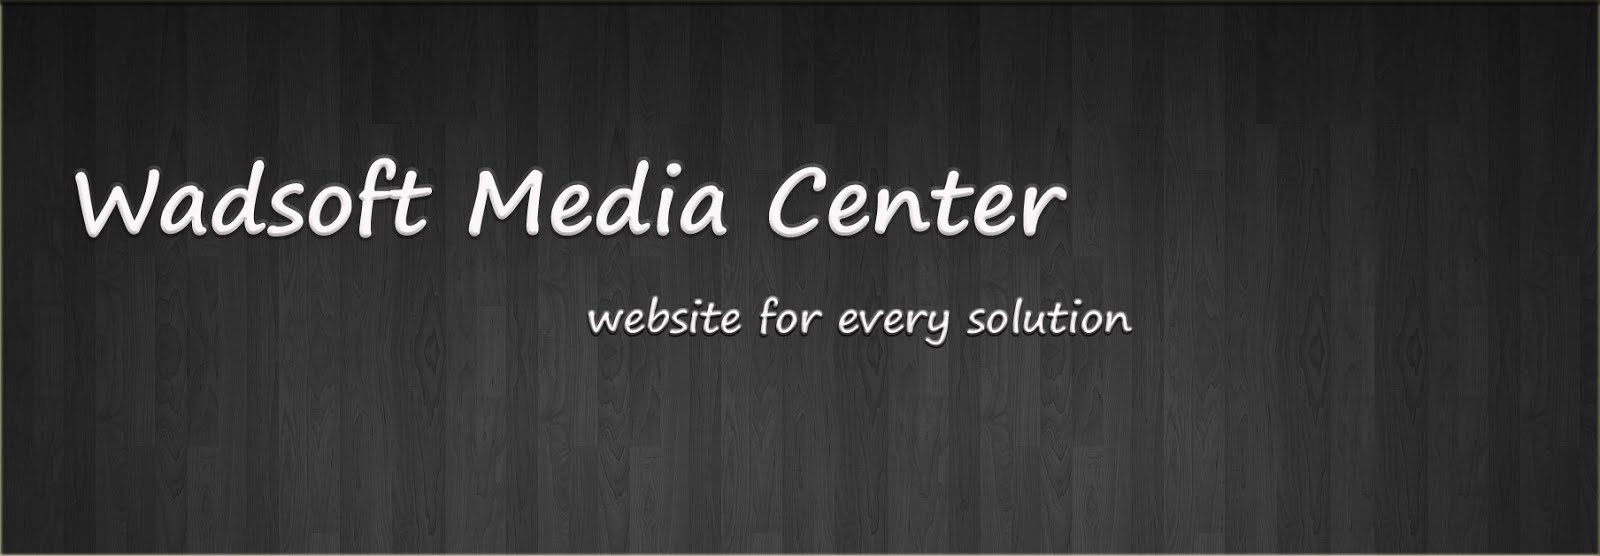 Wadsoft Media Center